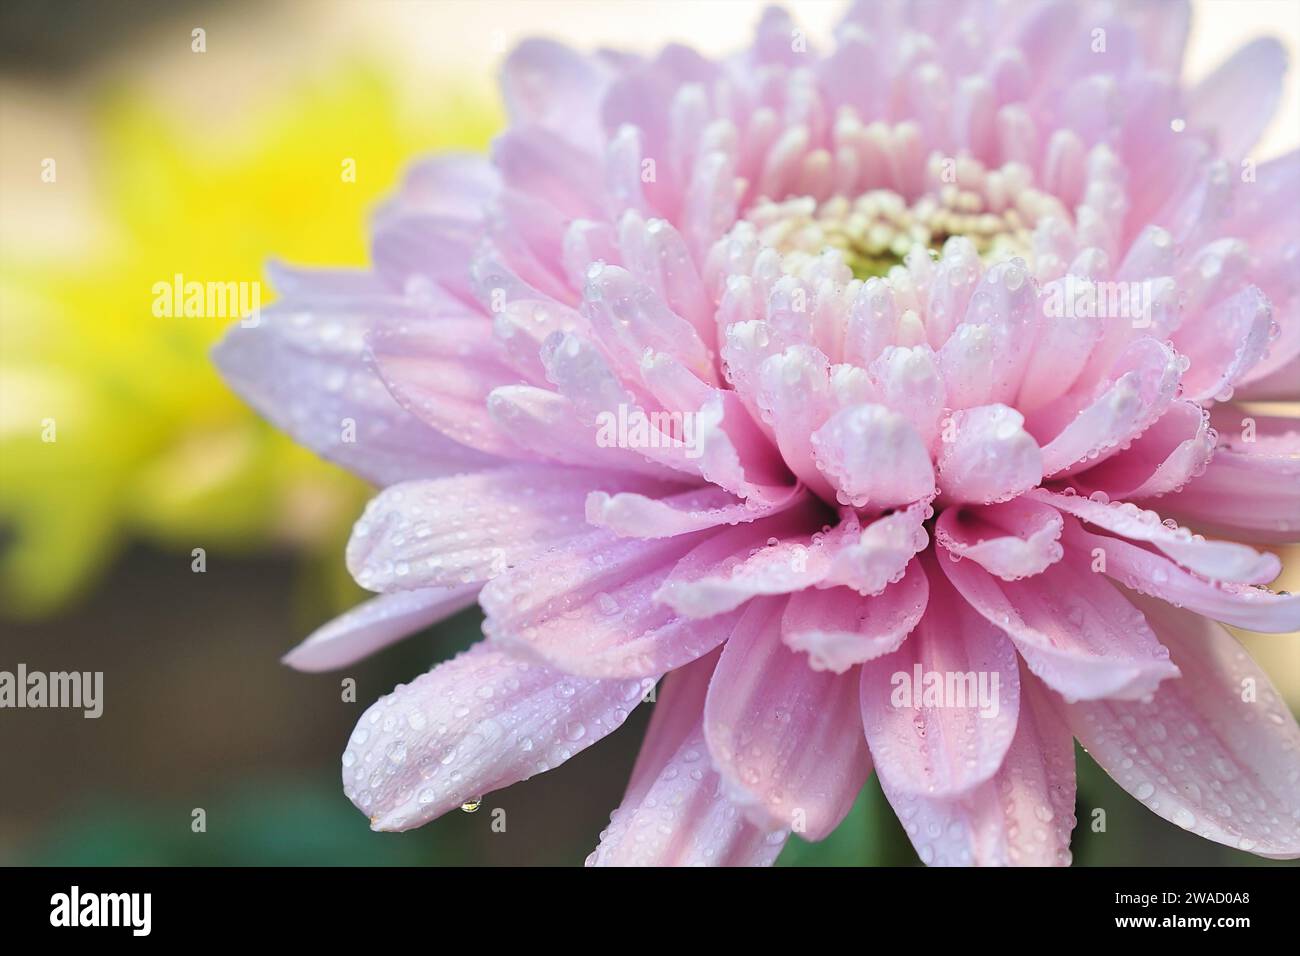 Pink Chrysanthemum Flower Petals in close-up photos Stock Photo